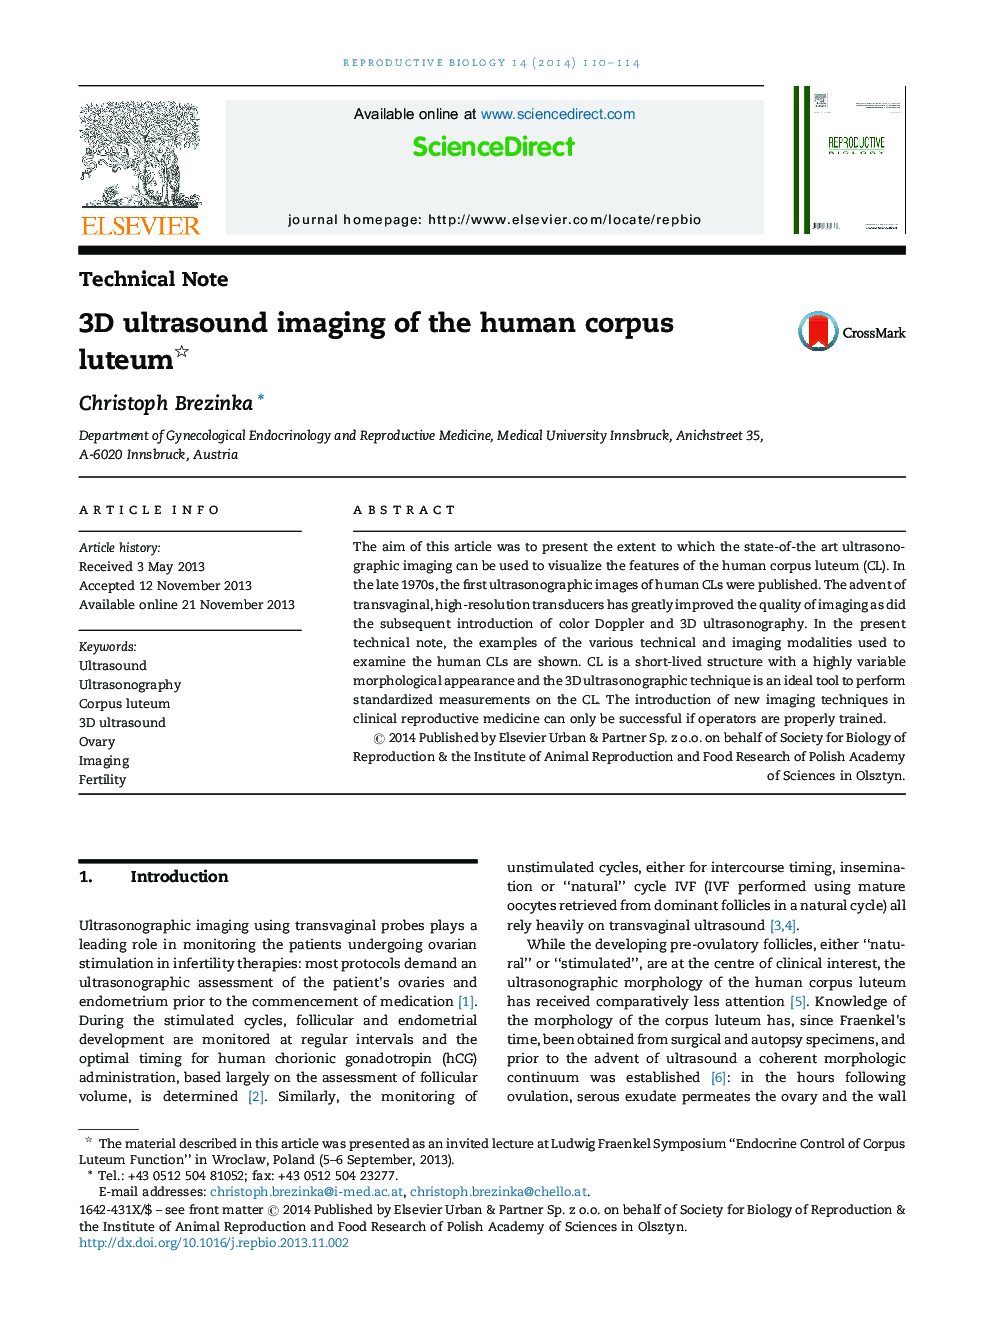 3D ultrasound imaging of the human corpus luteum 